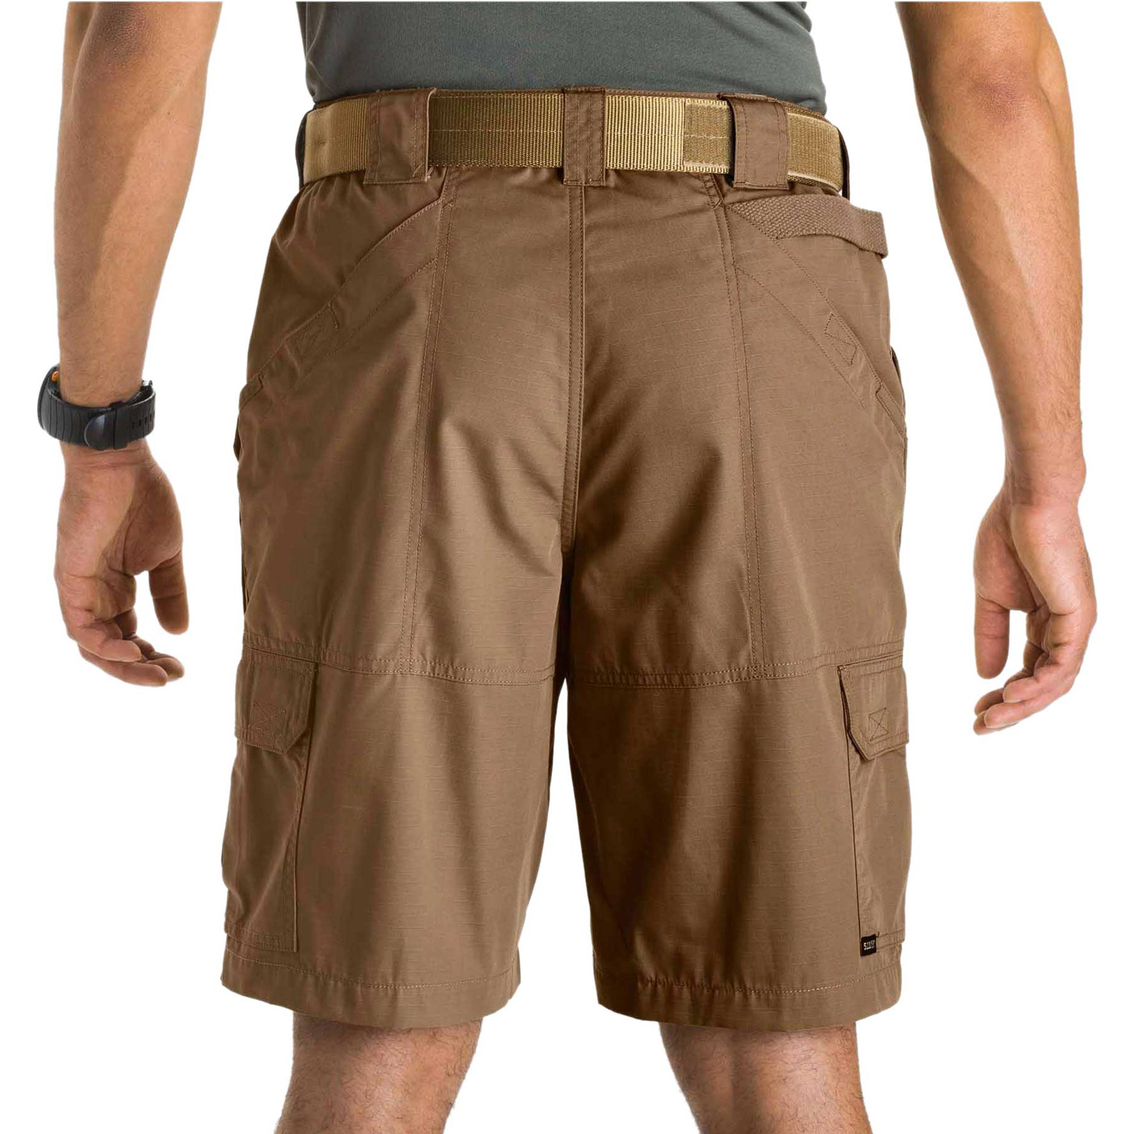 5.11 Taclite Pro 11 Shorts - Image 2 of 2